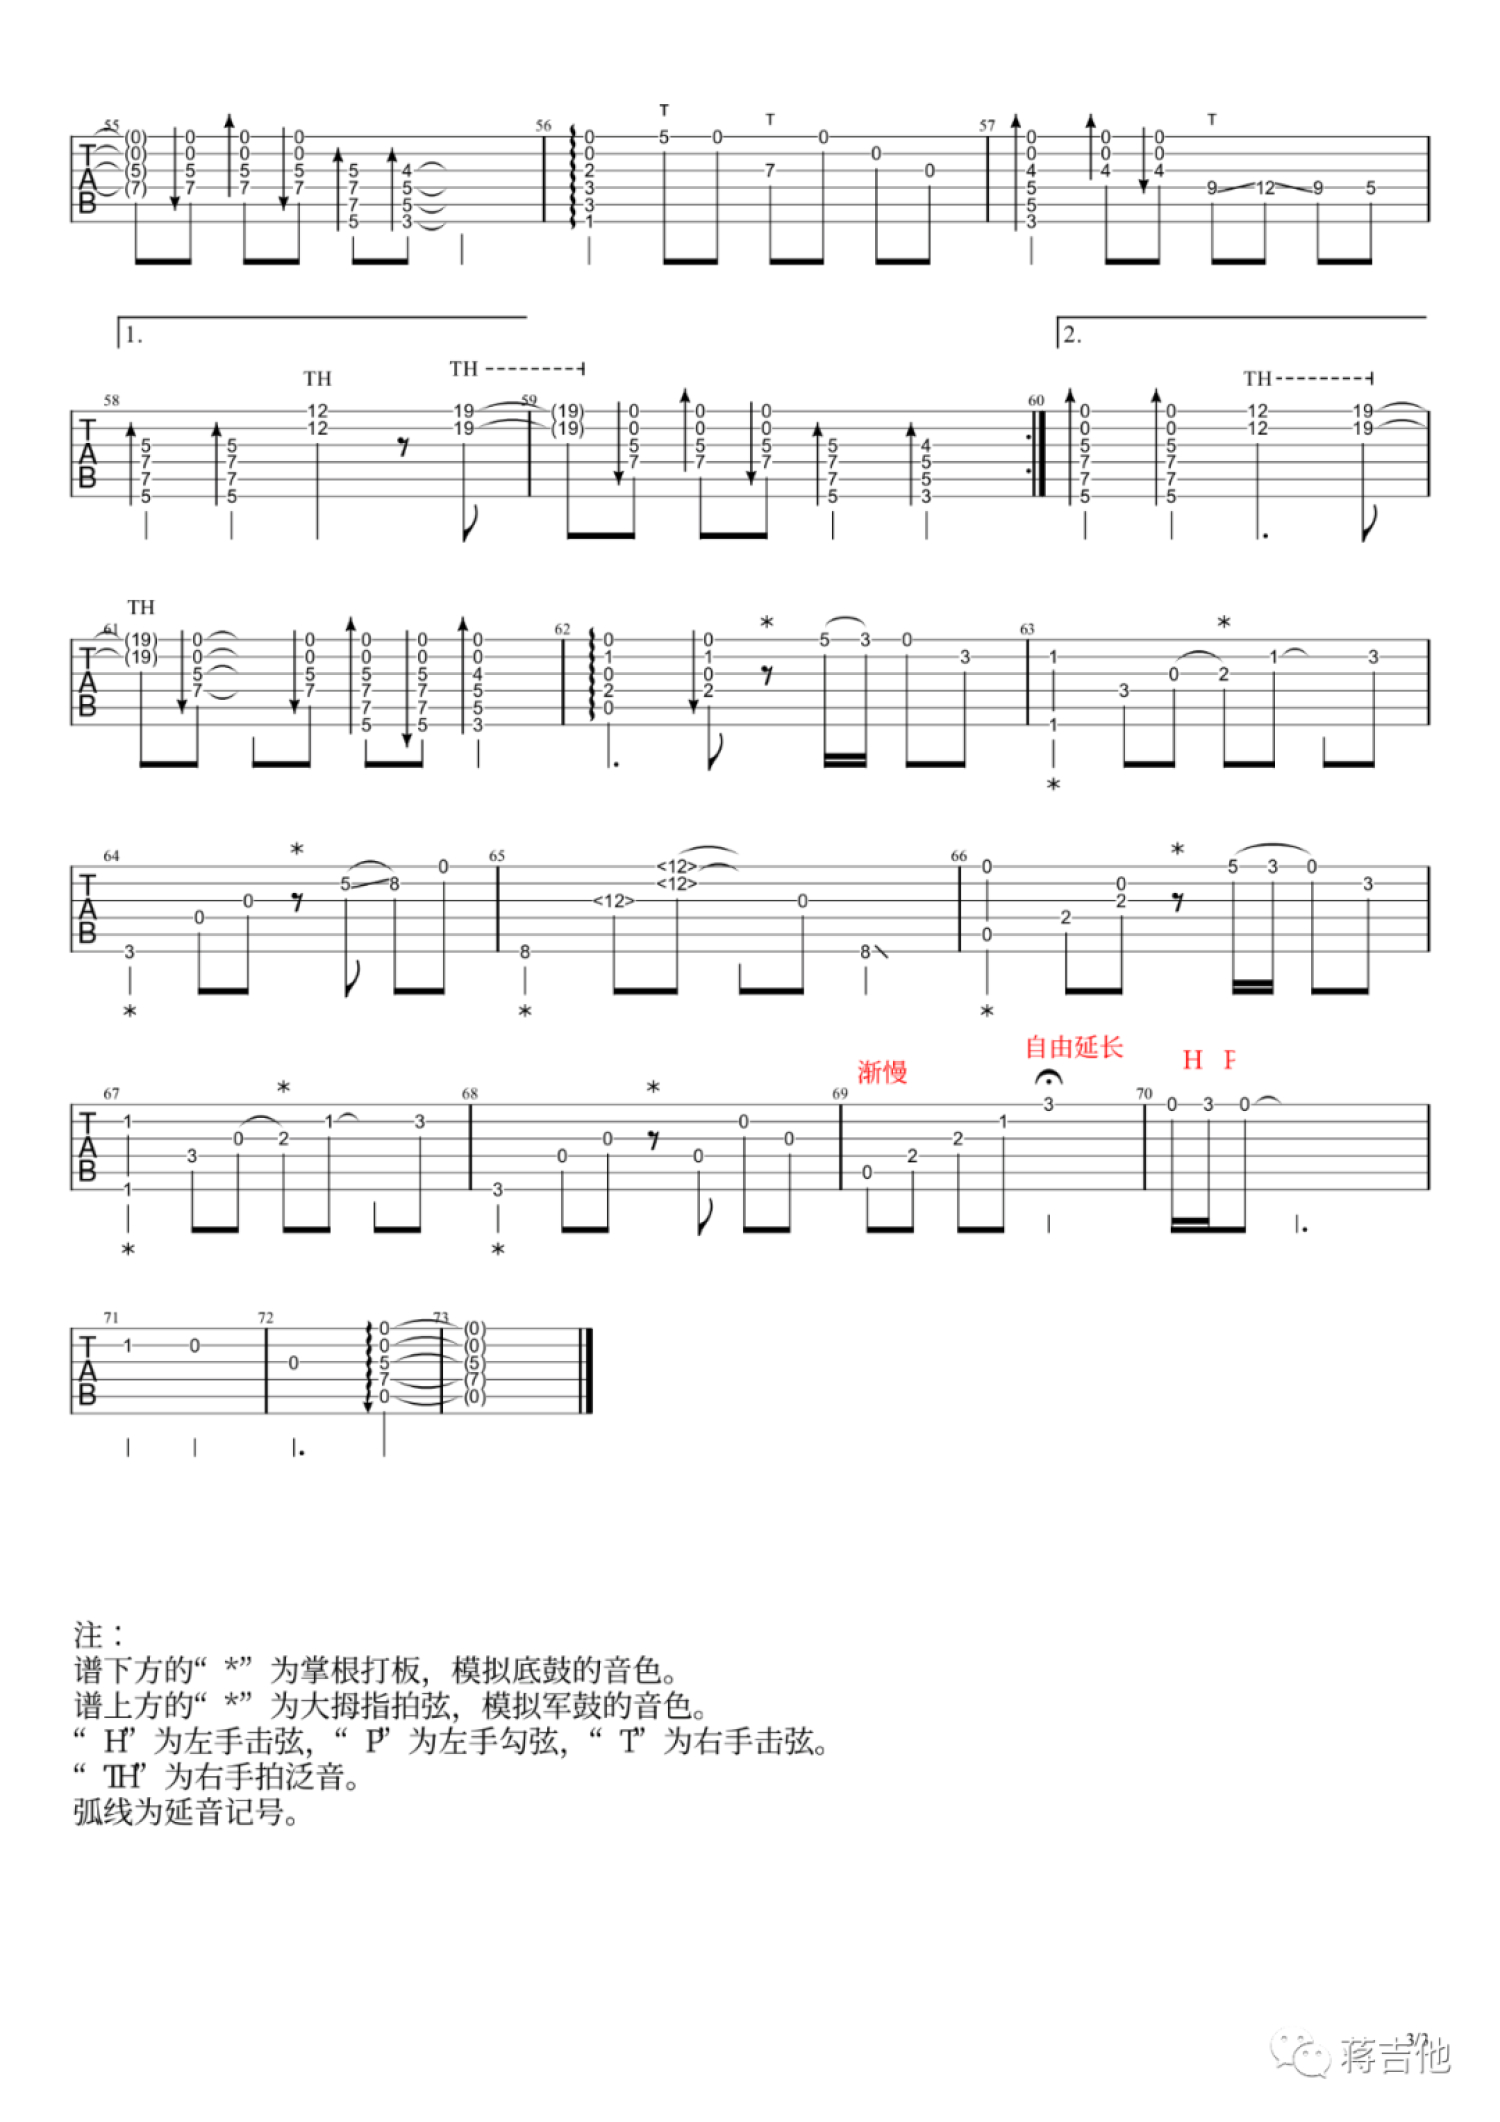 sunflower吉他谱 - 孙博培 - 吉他独奏谱 - 琴谱网